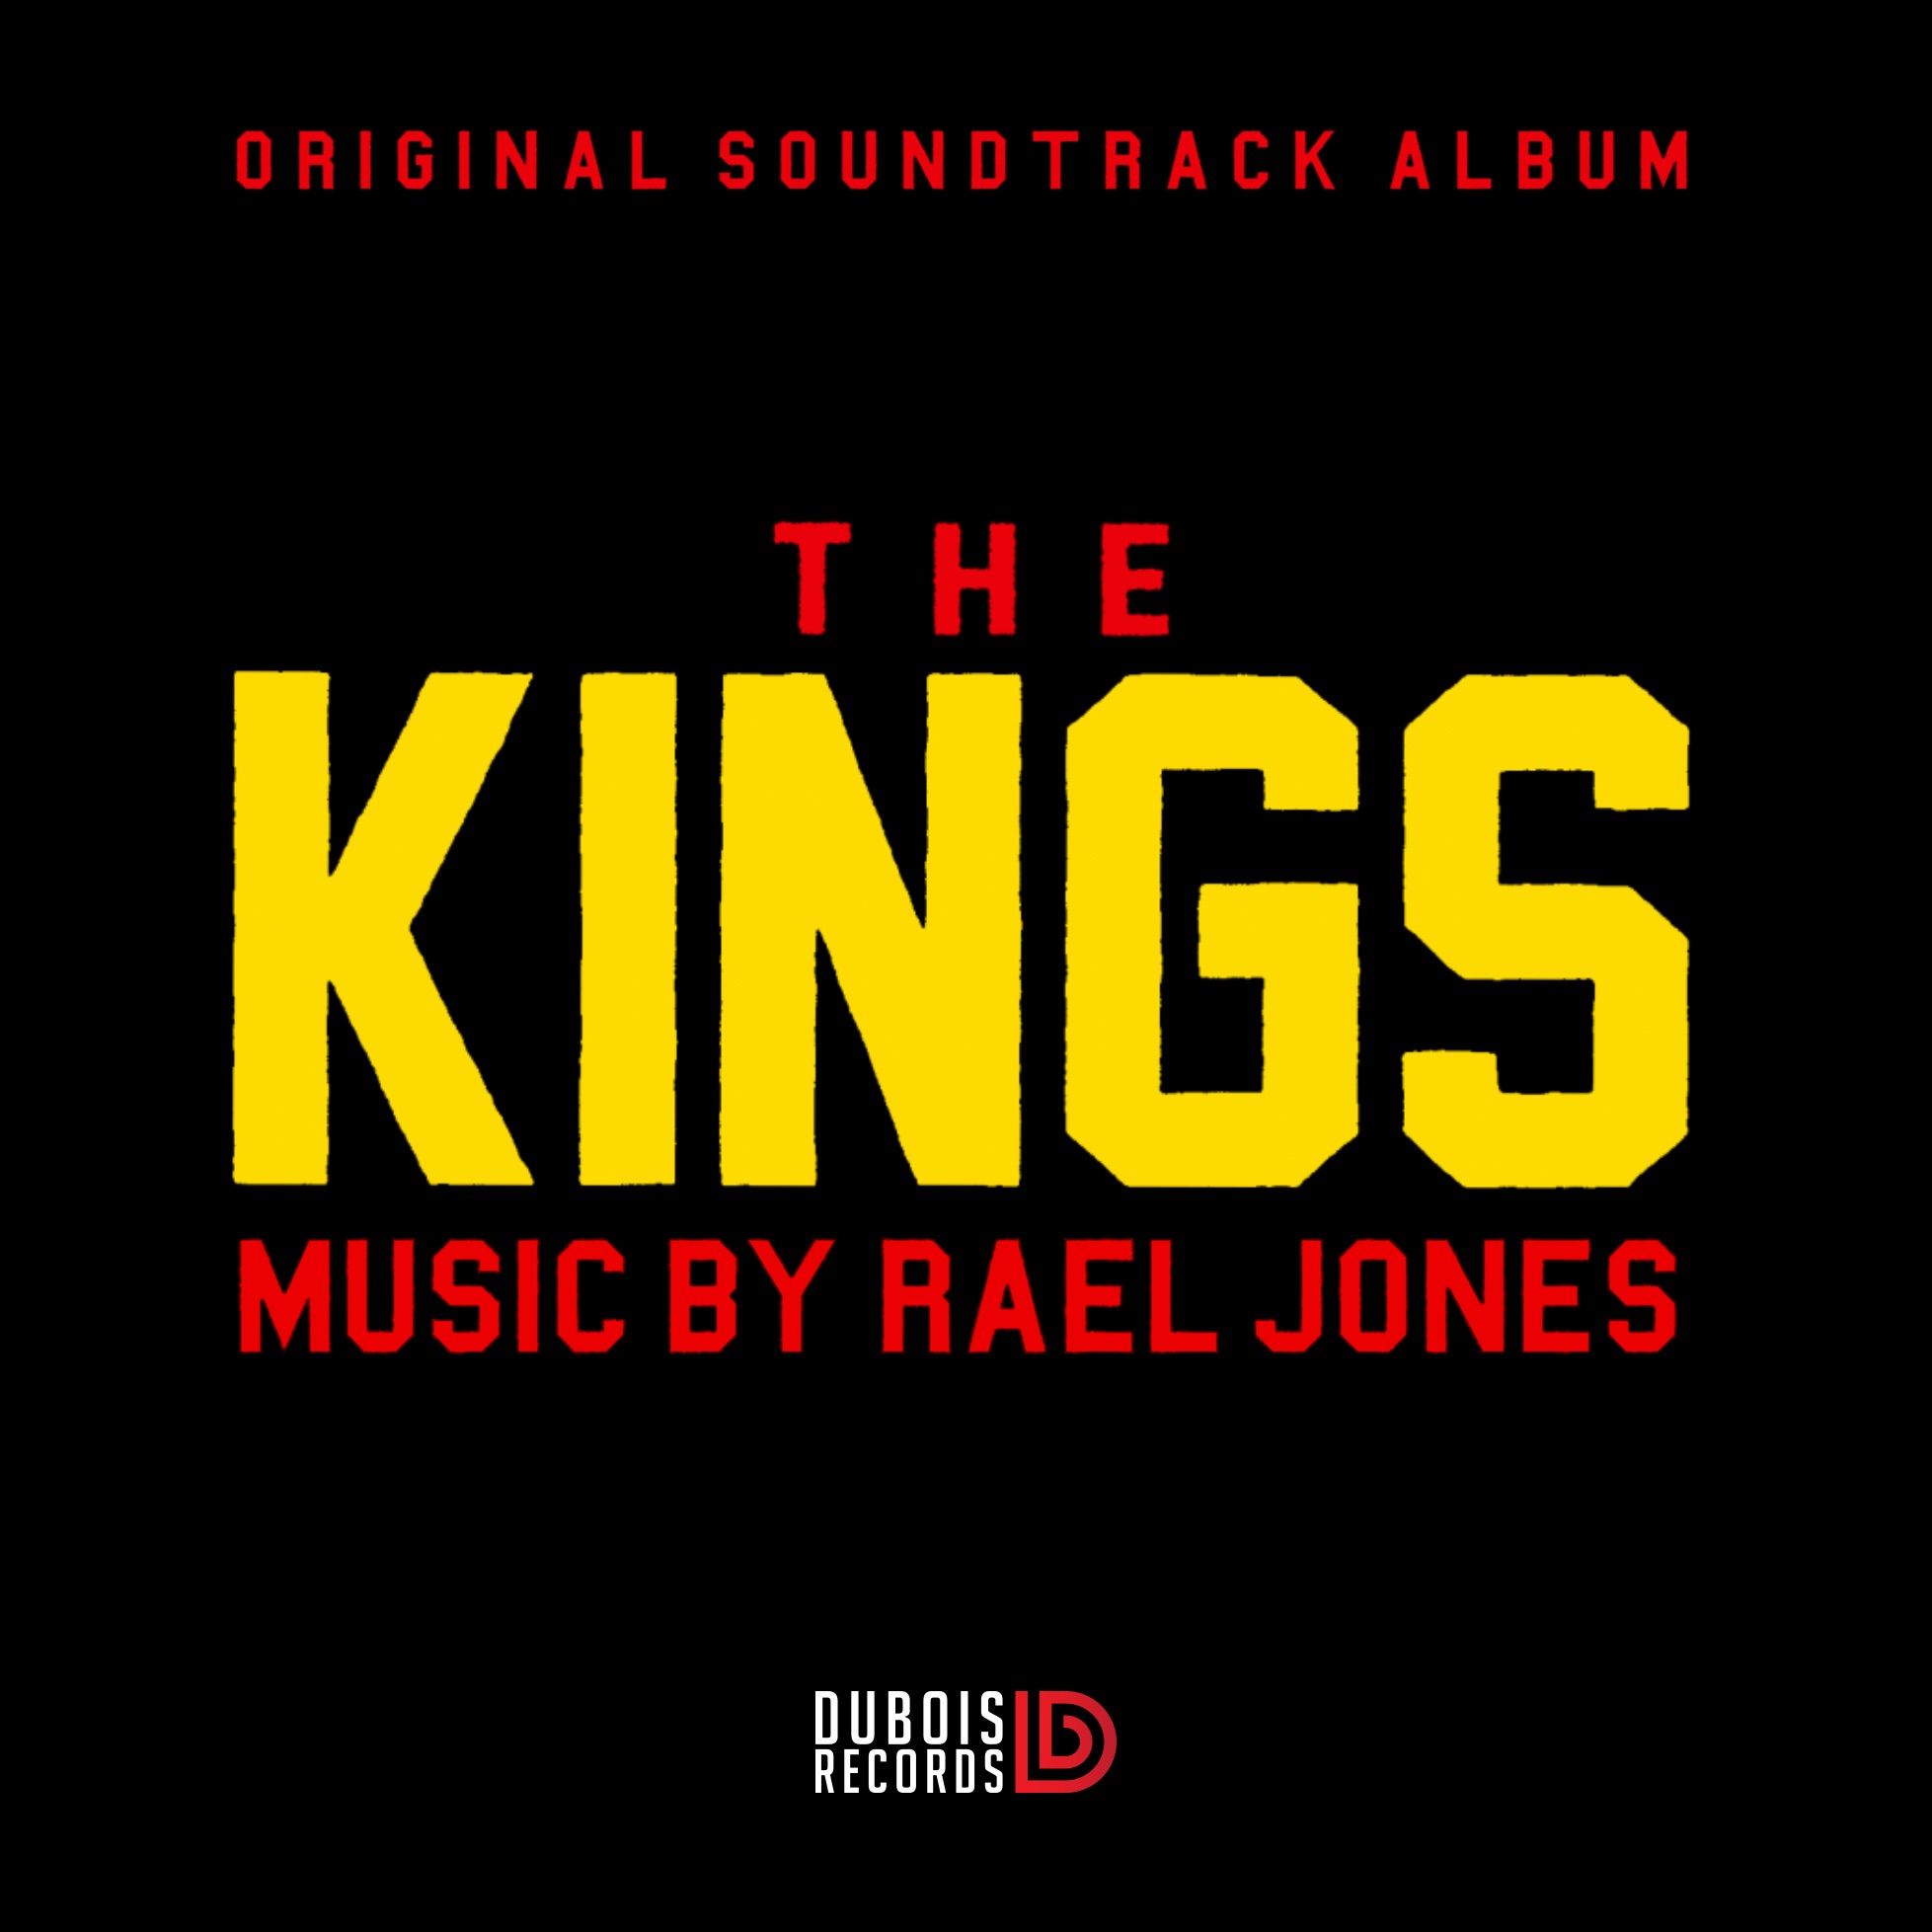 The original king. King музыка. The Soundtrack Kings. Tulsa King Soundtrack. The Original Kings of comedy Lathem Entertainment presents.